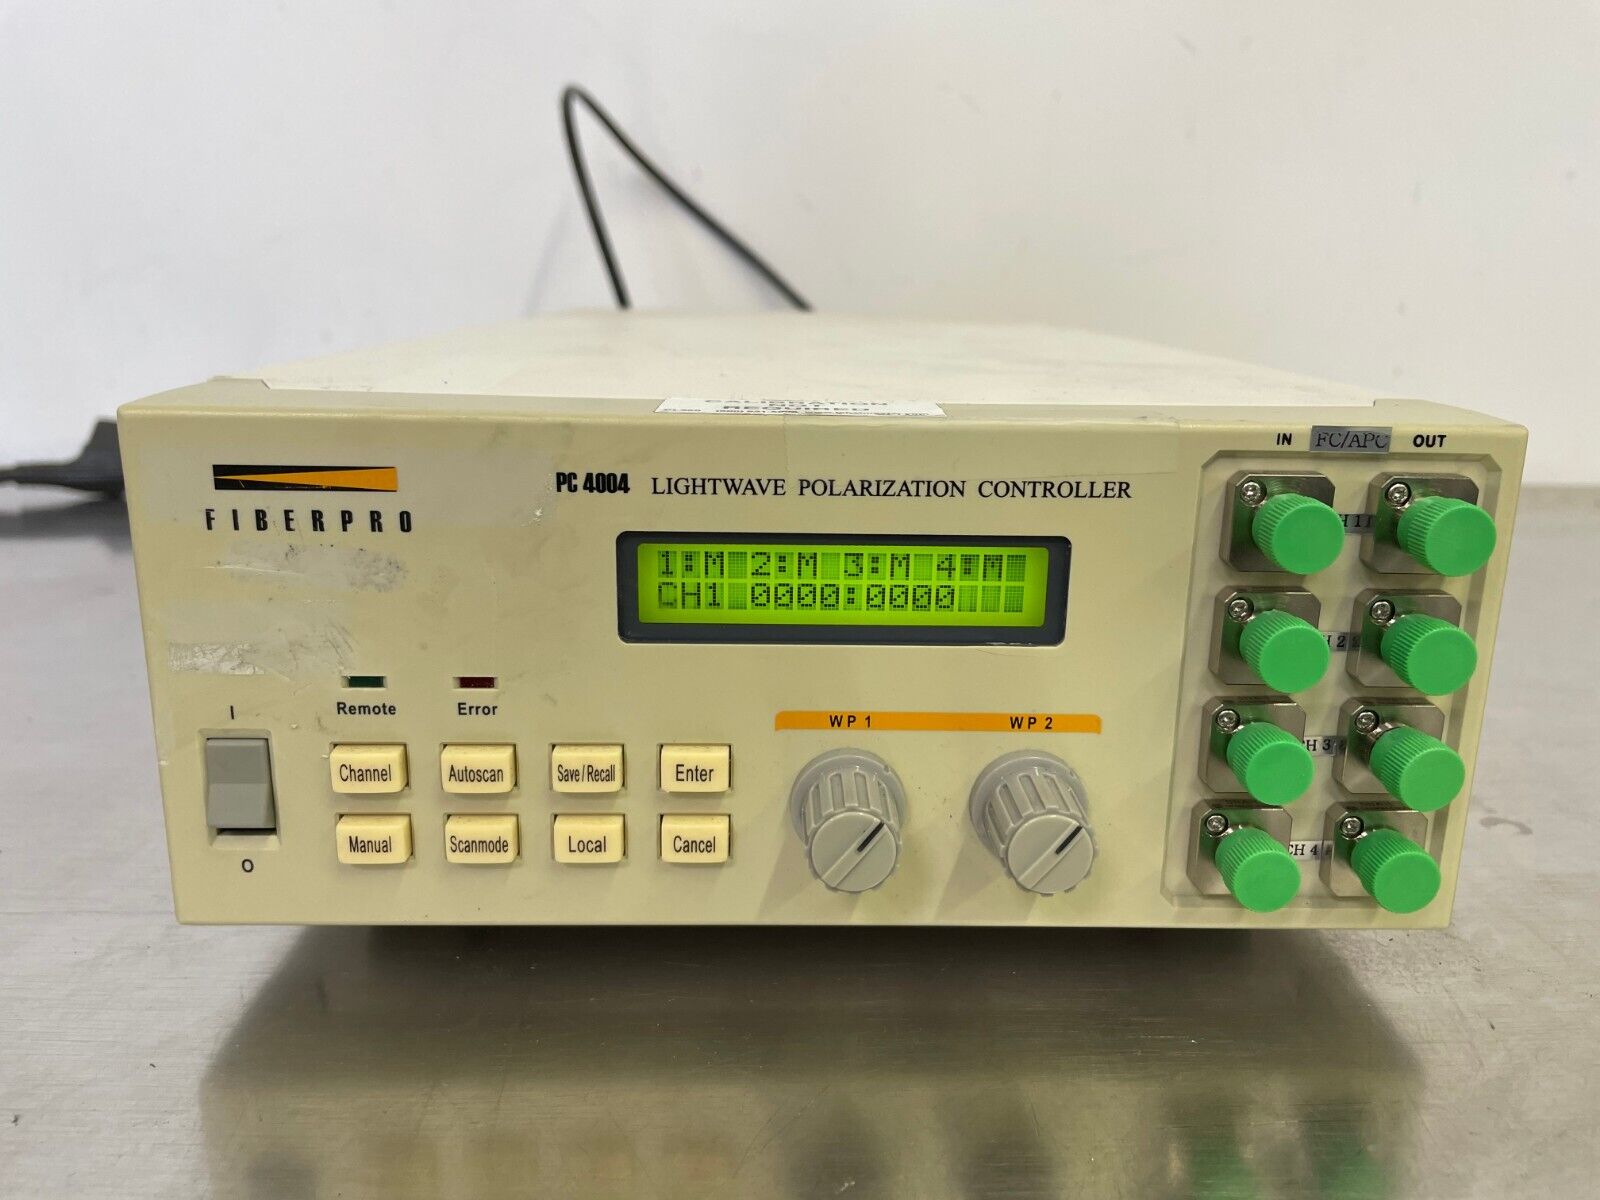 FiberPro PC-4004 Lightwave Polarization Controller PC4004 *Fully Functional*